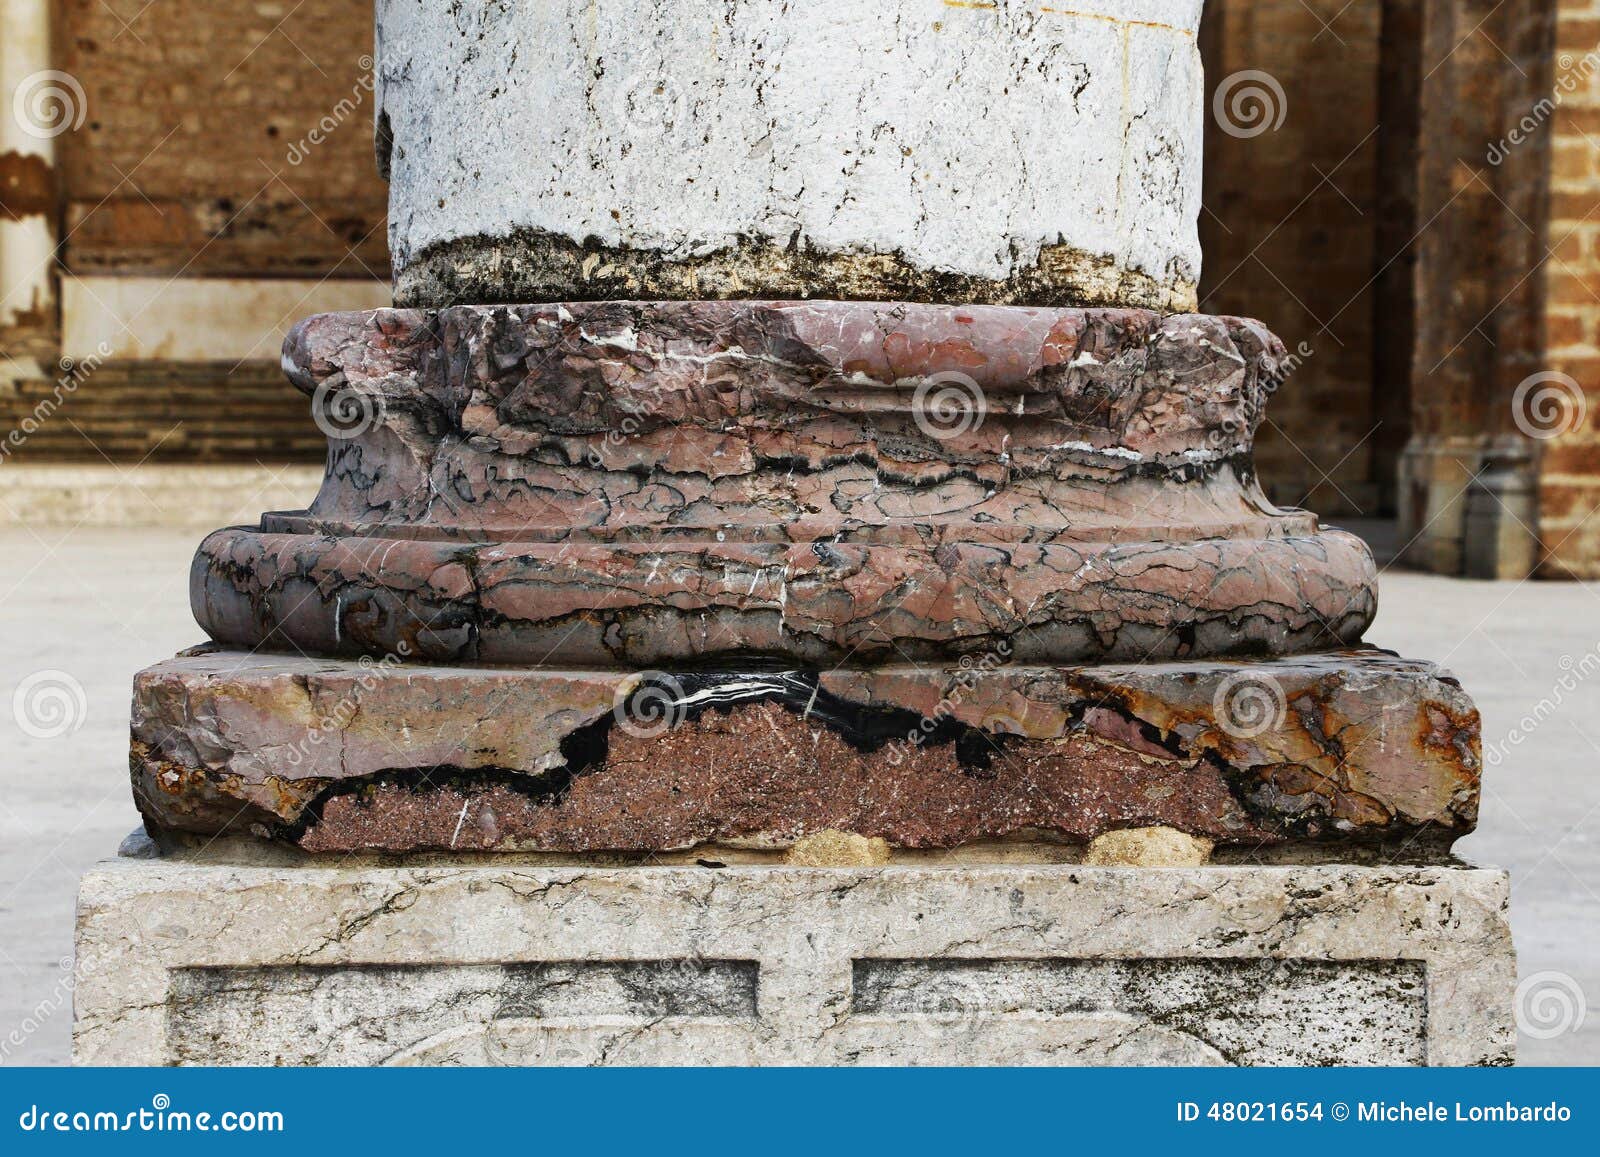 marble column base, from salemi, sicily